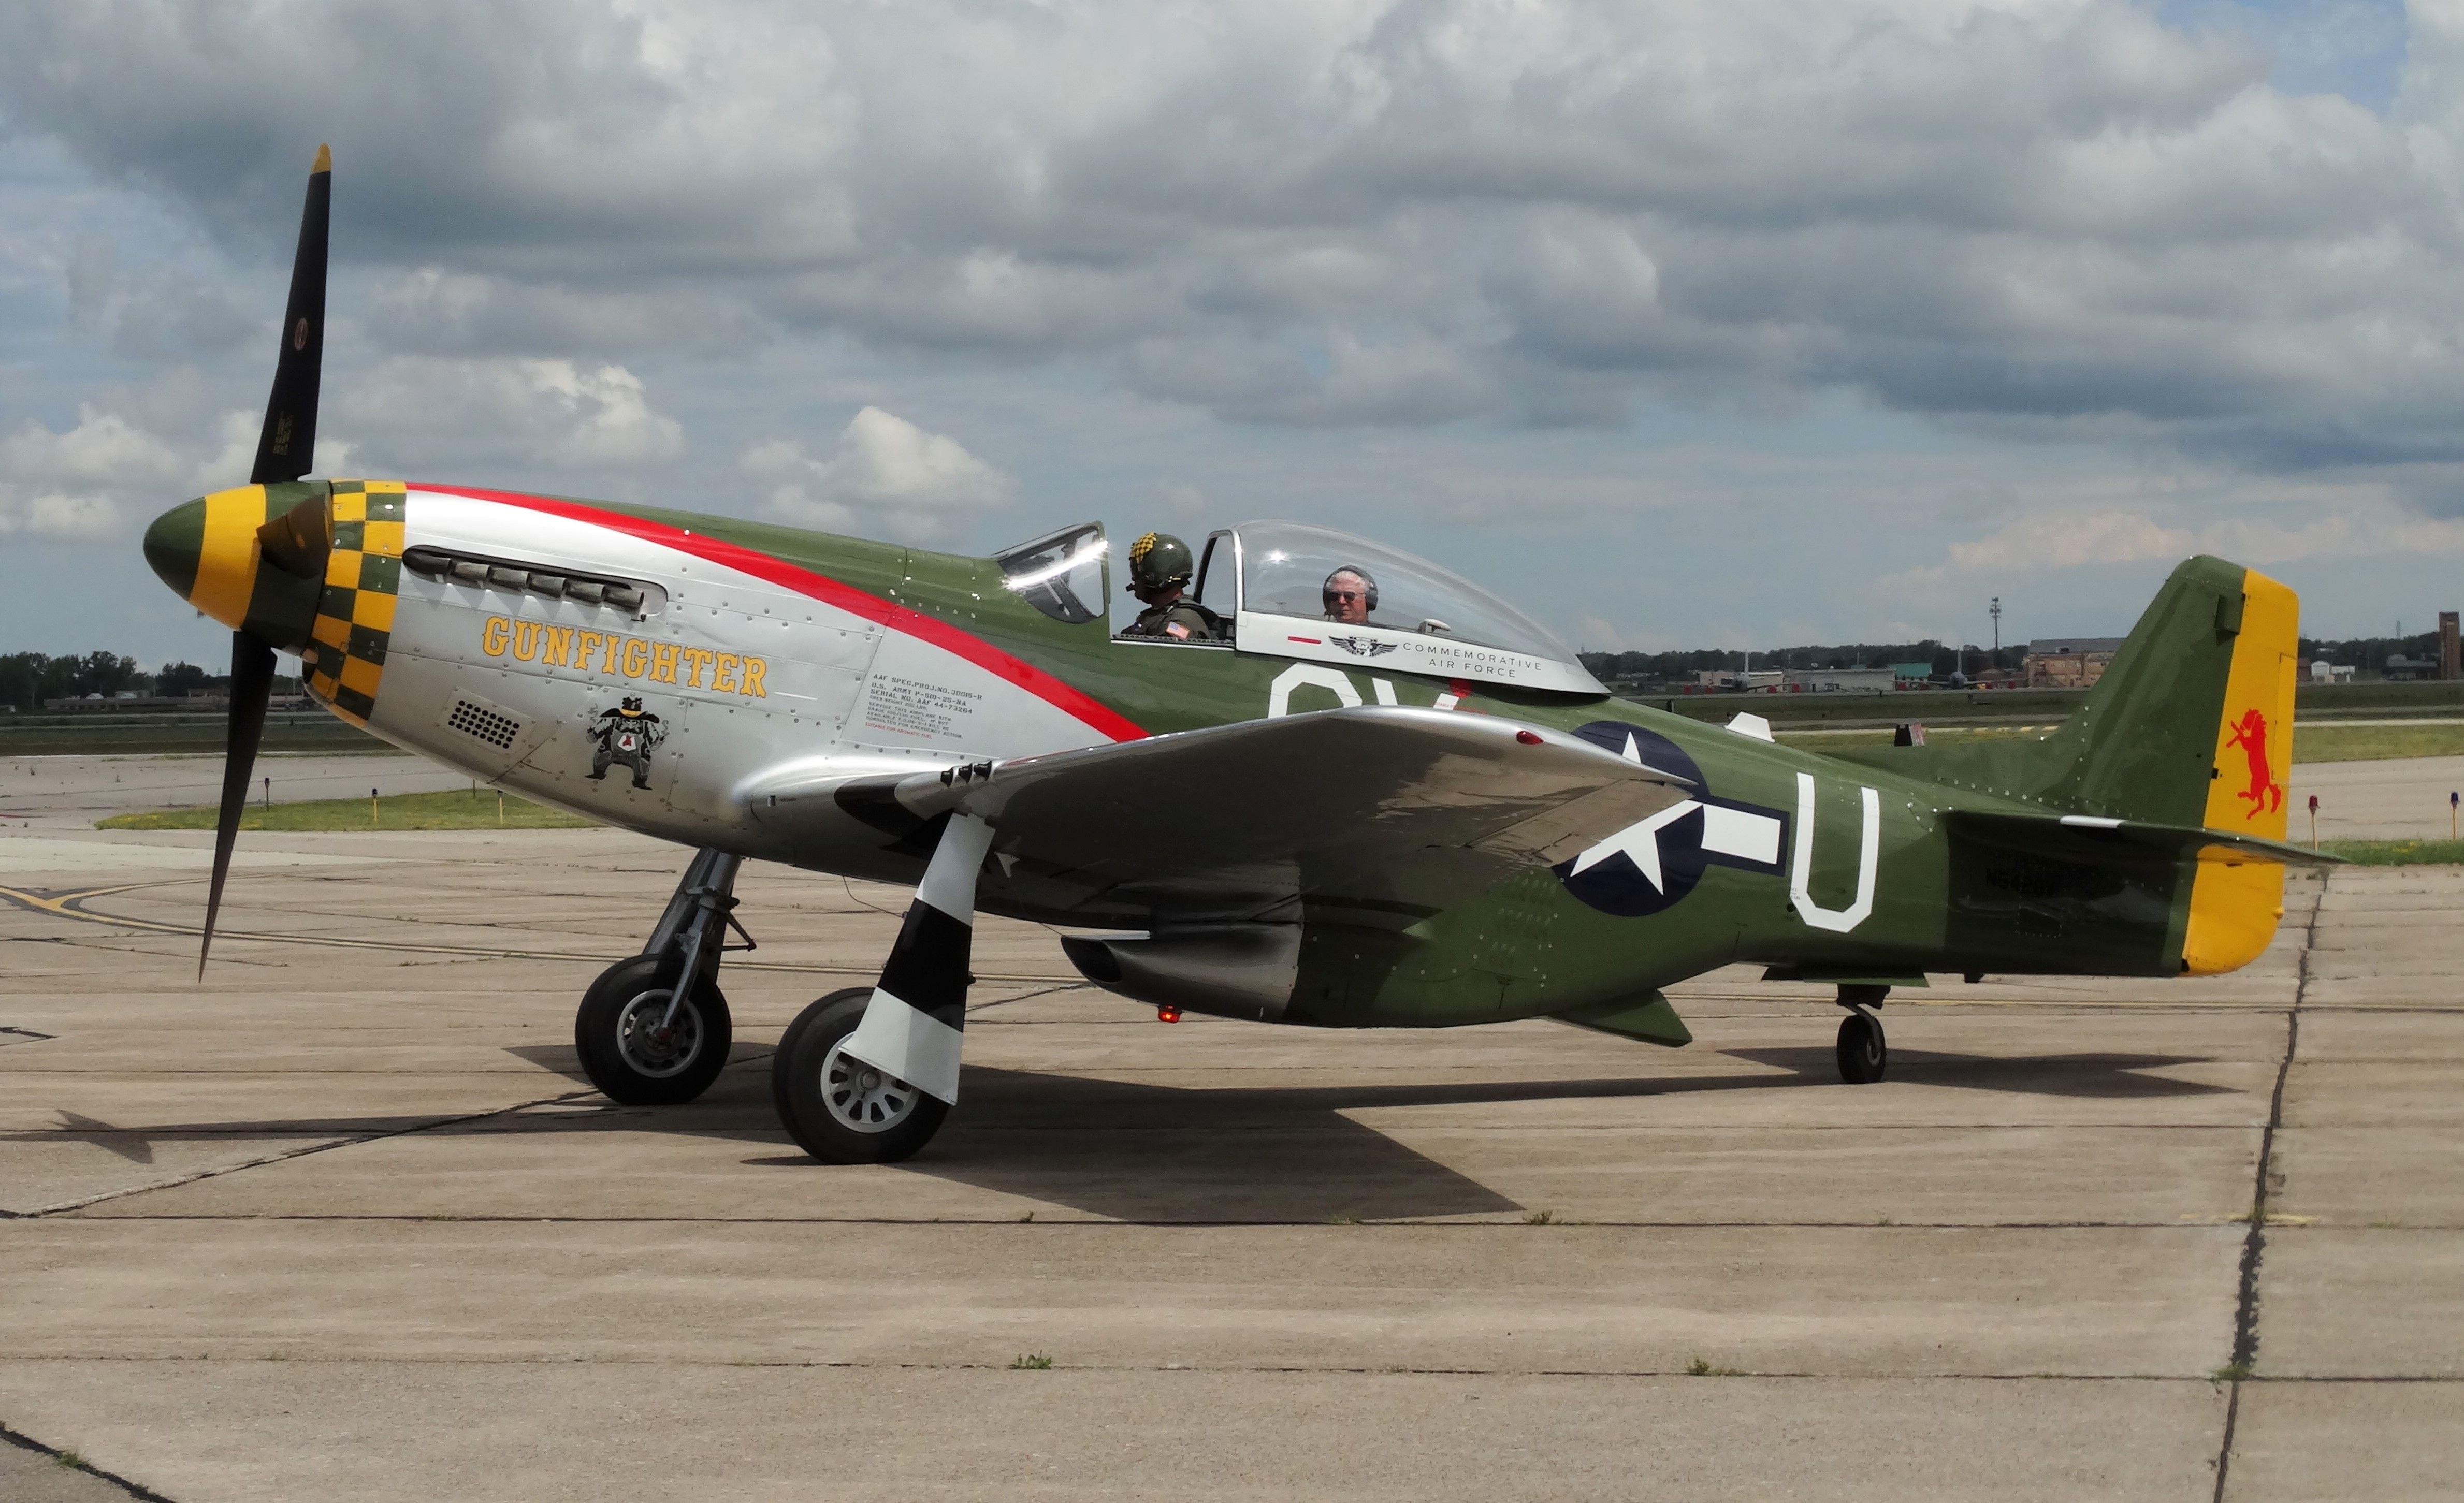 North American P-51 Mustang (N5428V) - P51 Mustang "Gunfighter" at the Airpower History Tour at IAG!